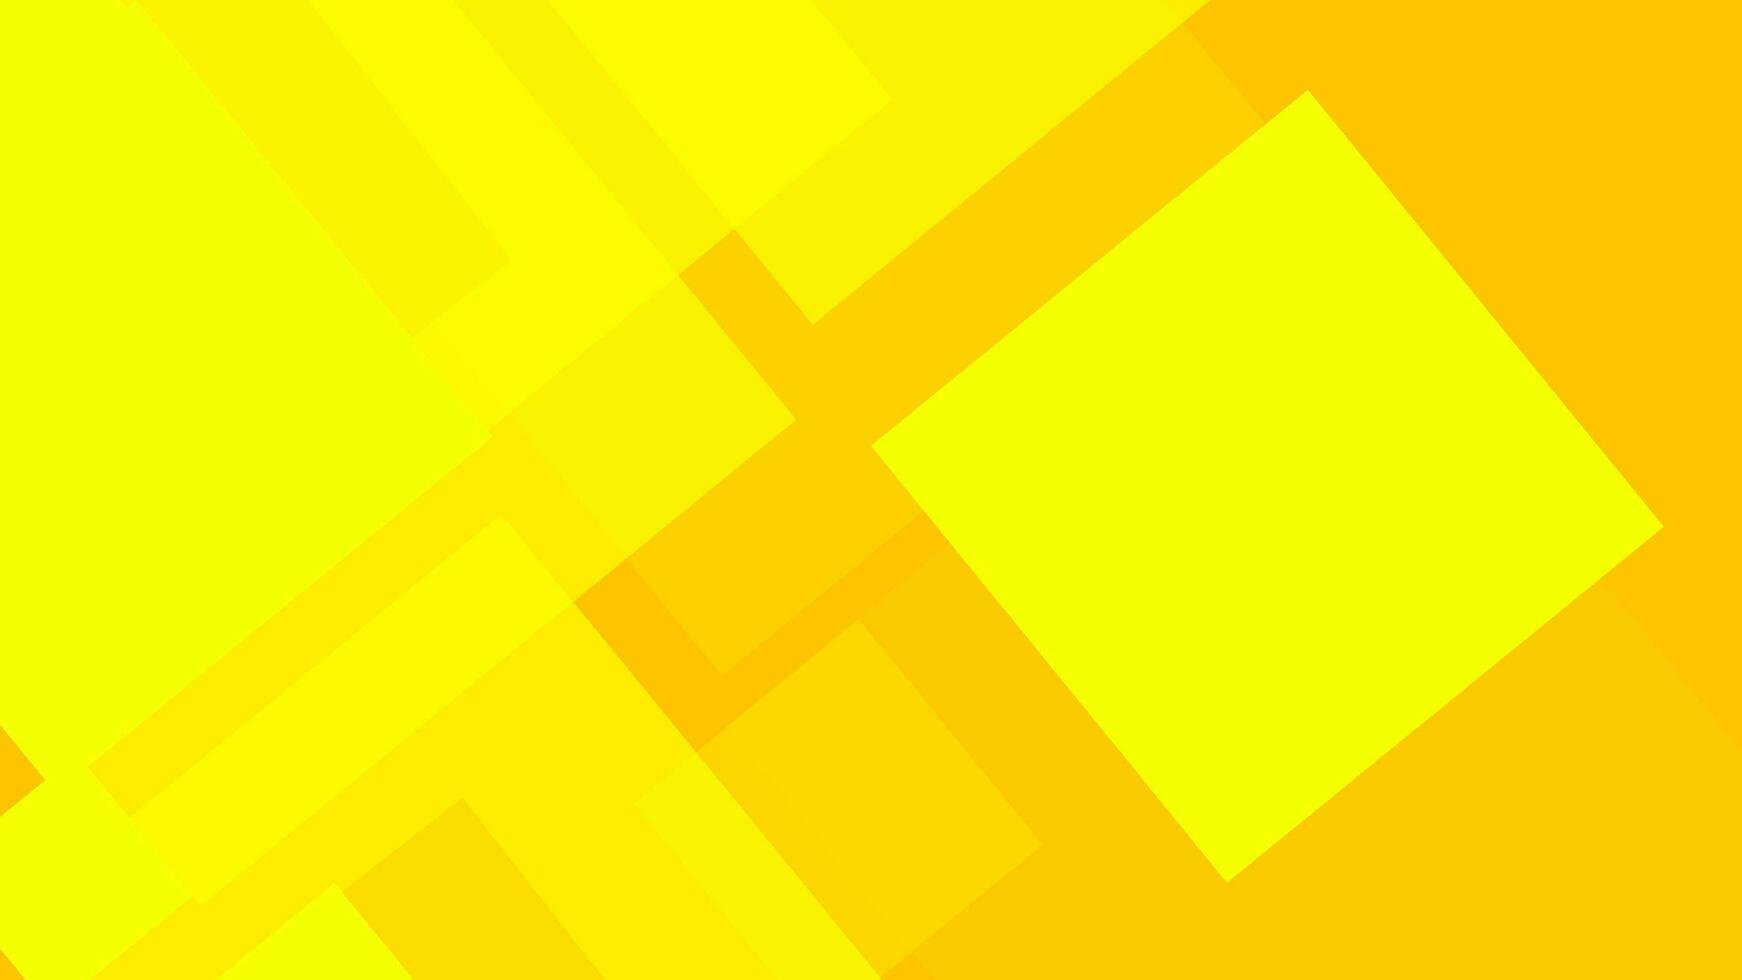 Abstract yellow background, orange background photo